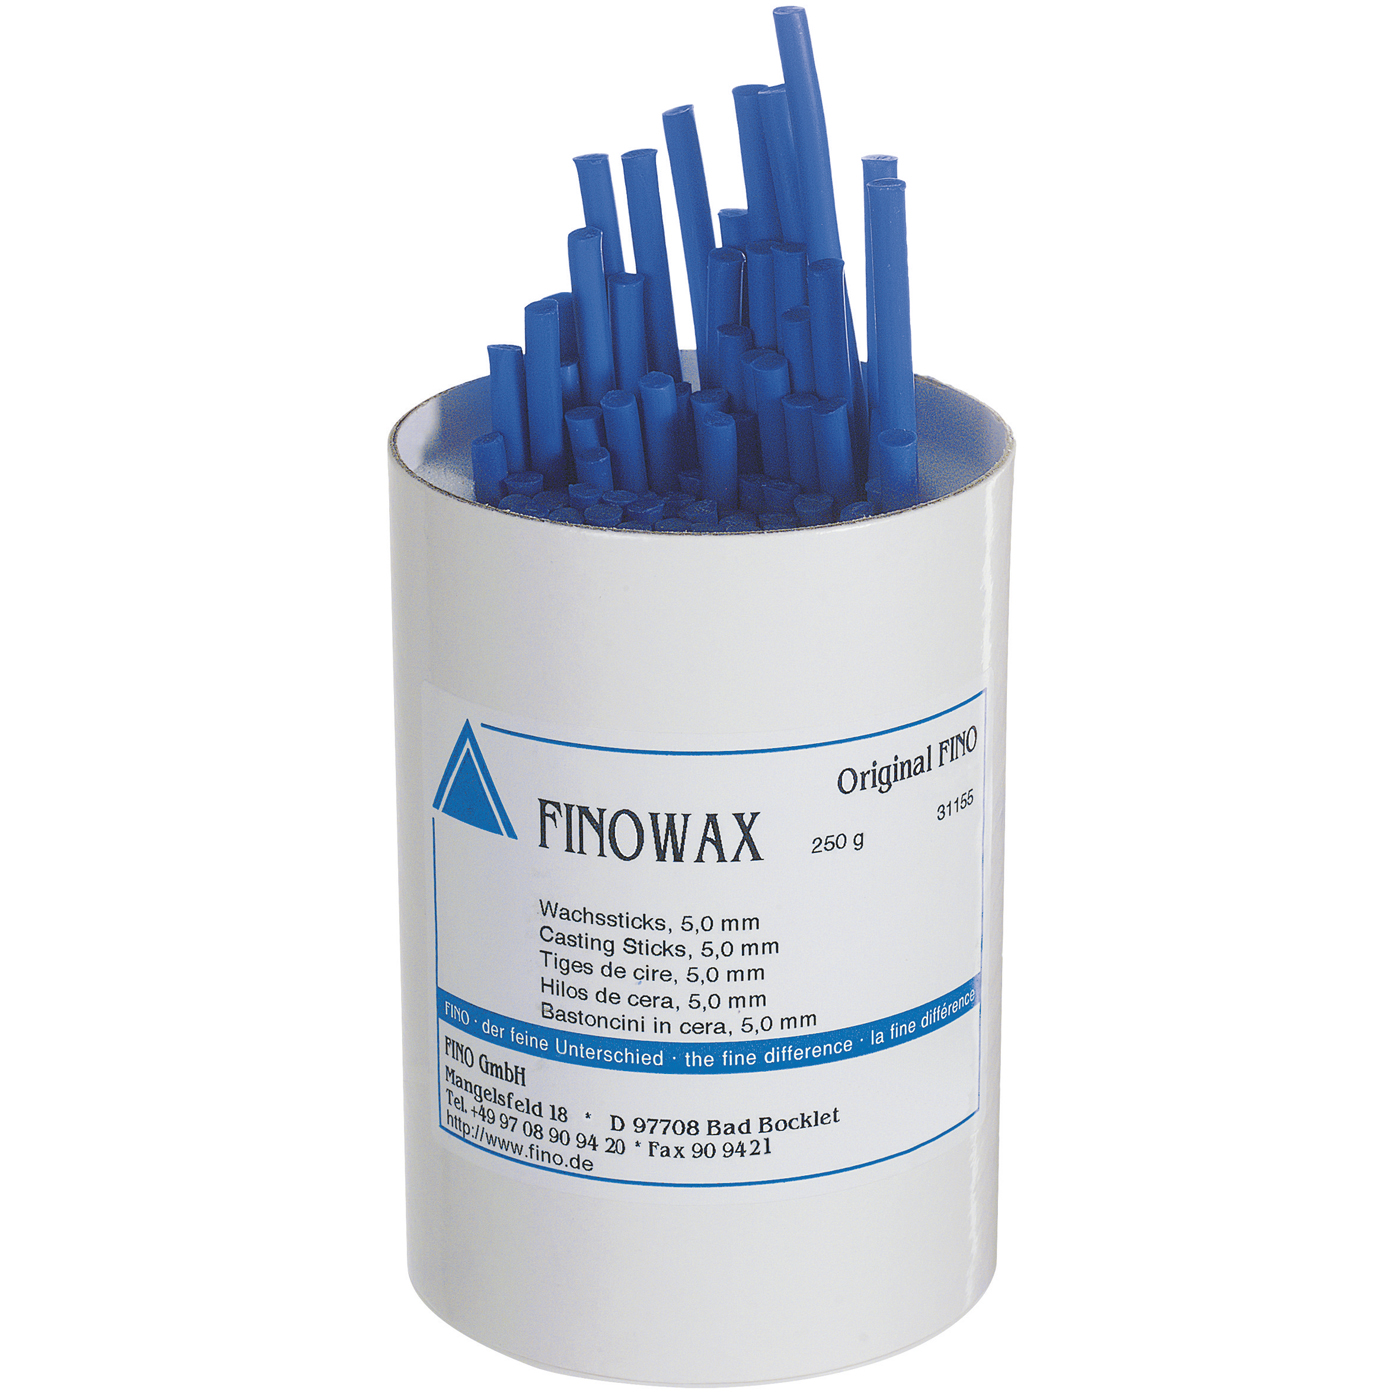 FINOWAX Wachssticks, ø 5,0 mm, blau - 250 g